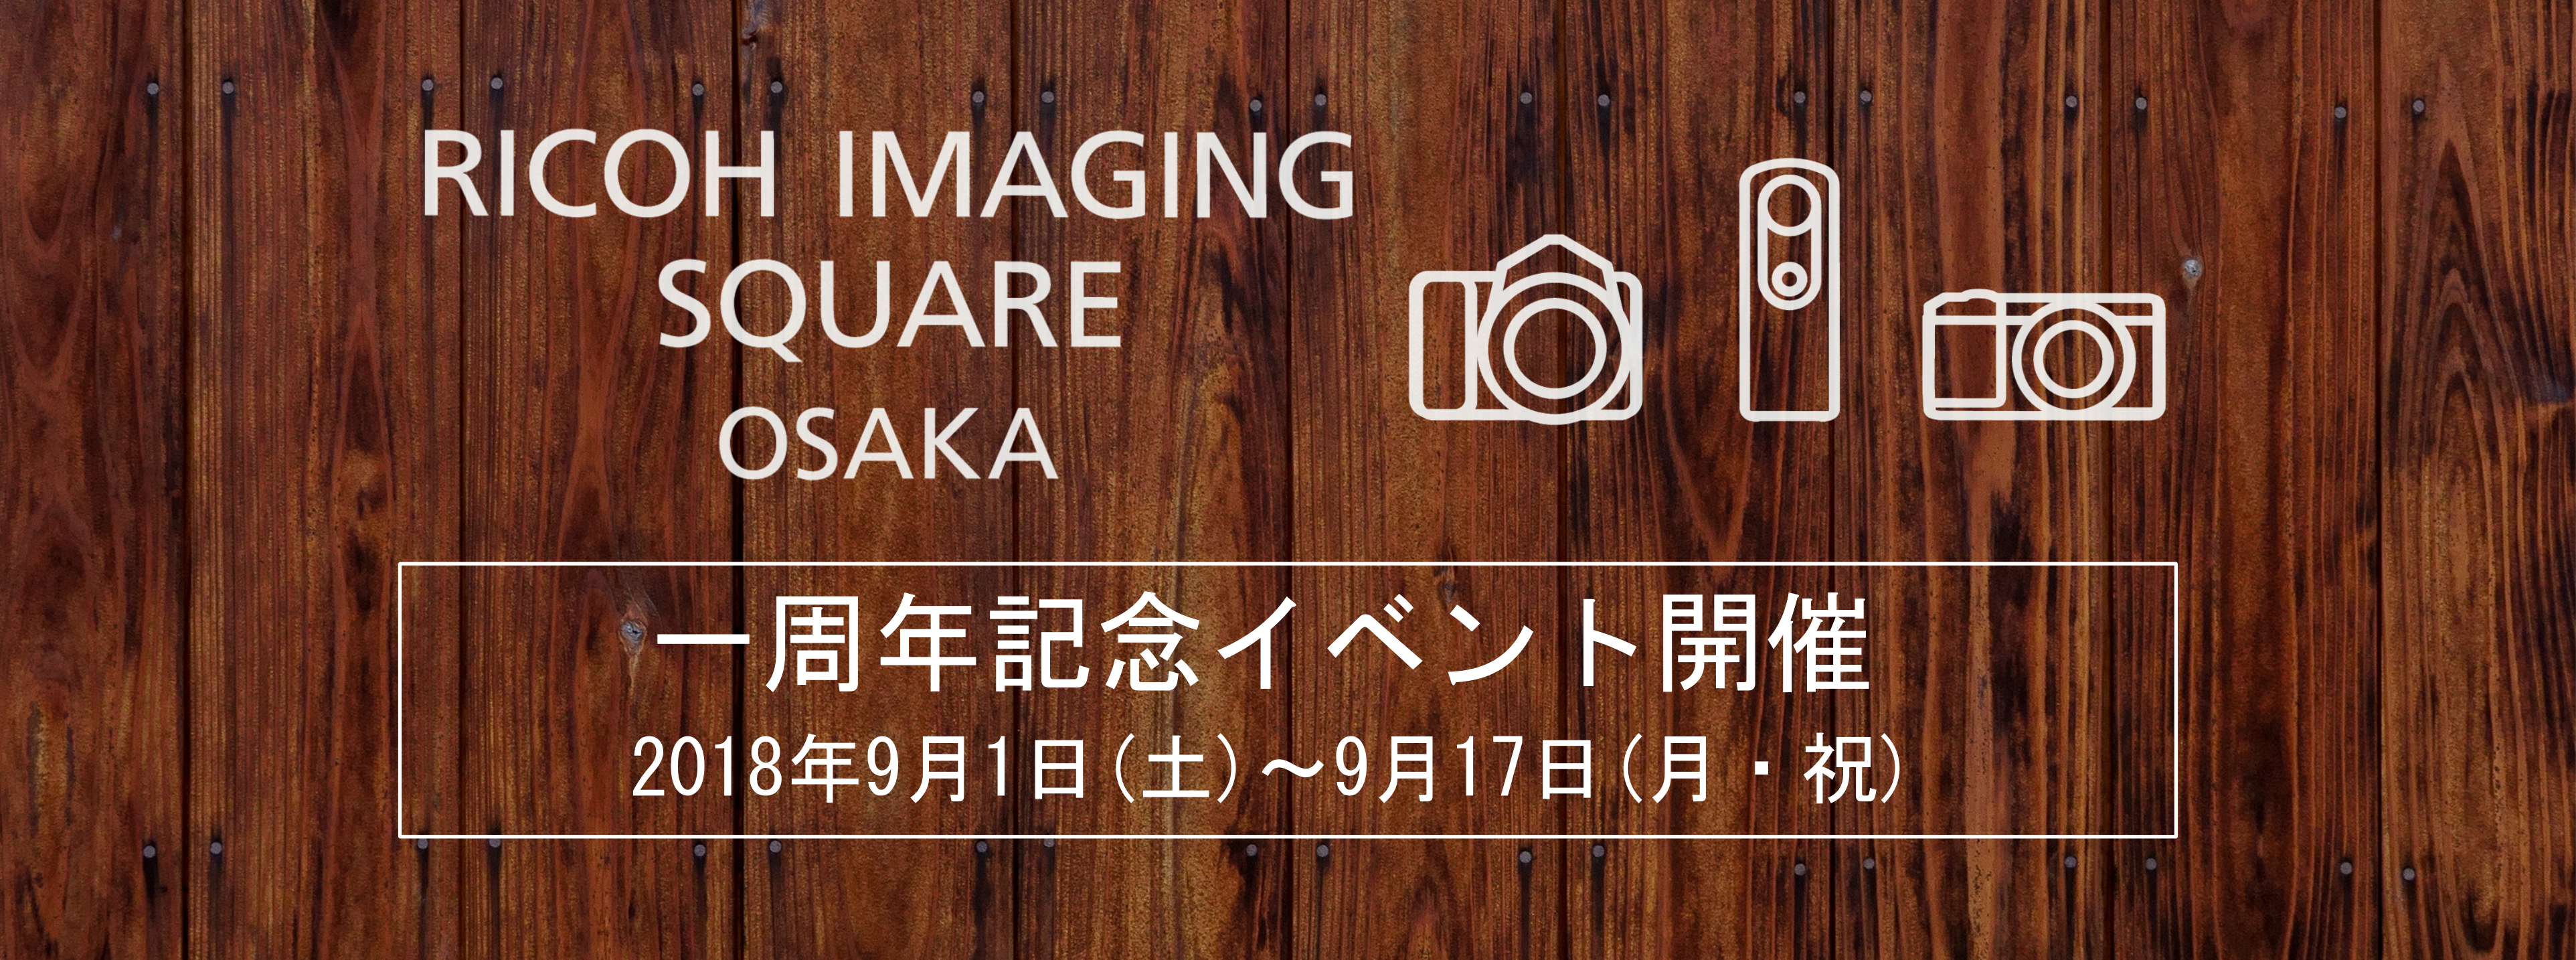 RICOH IMAGING SQUARE OSAKA 一周年記念イベント開催